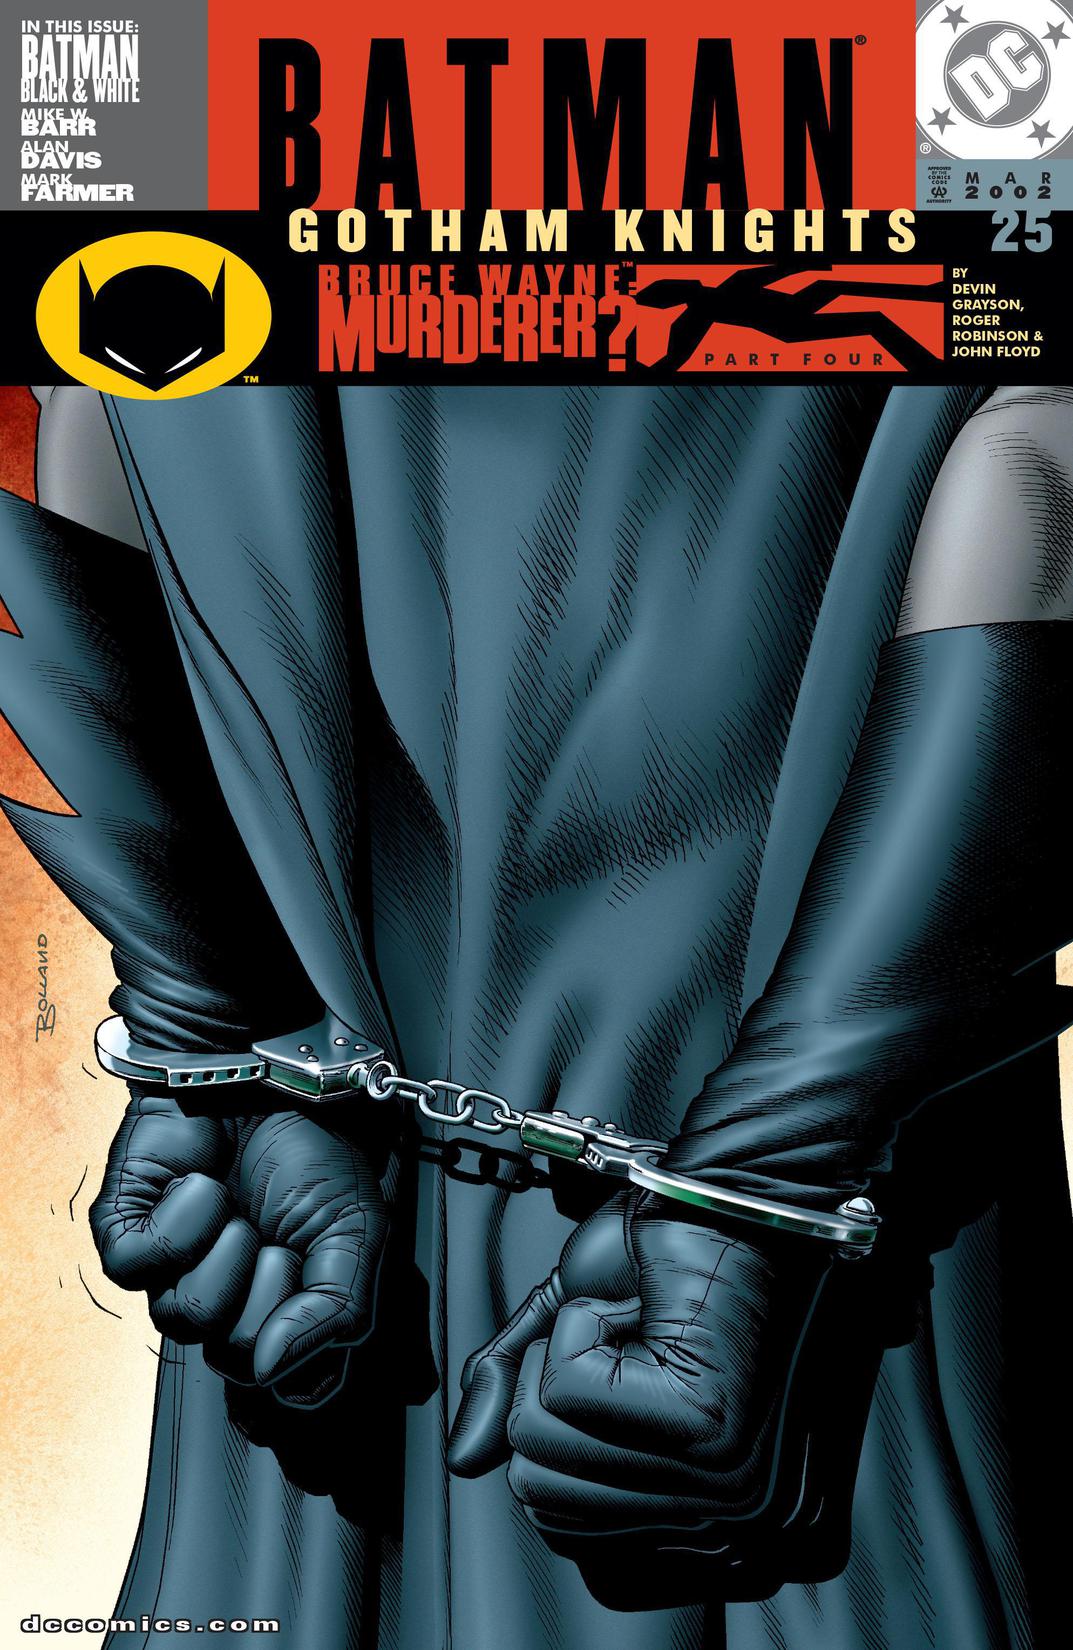 Batman: Gotham Knights #25 preview images